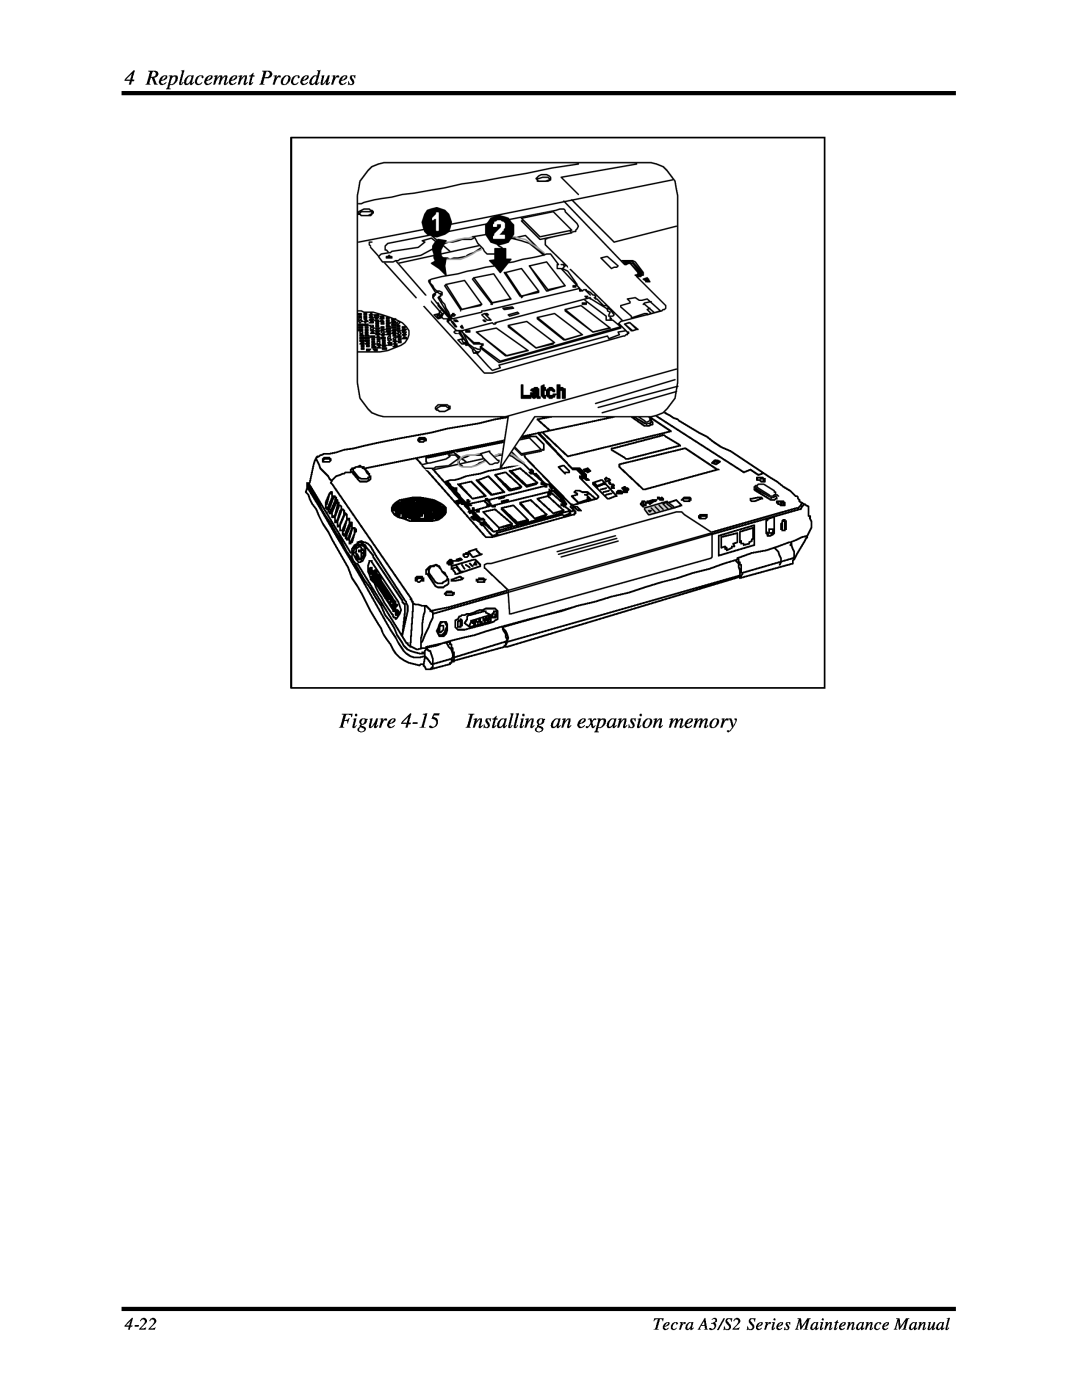 Toshiba manual 15 Installing an expansion memory, Replacement Procedures, 4-22, Tecra A3/S2 Series Maintenance Manual 